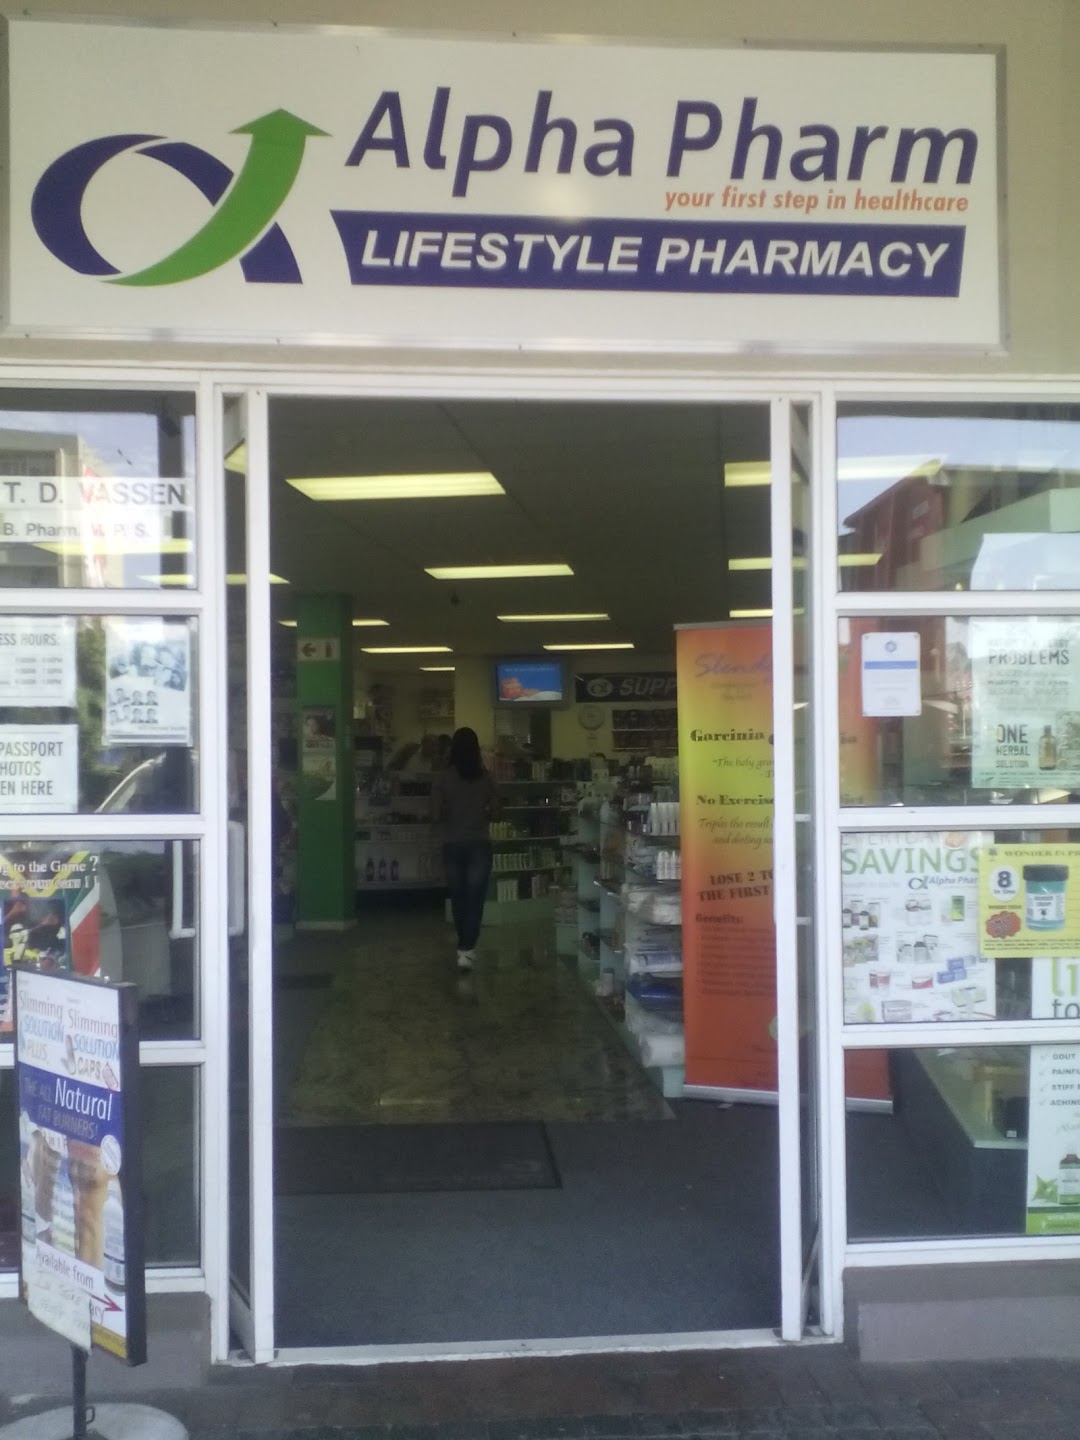 Lifestyle pharmacy